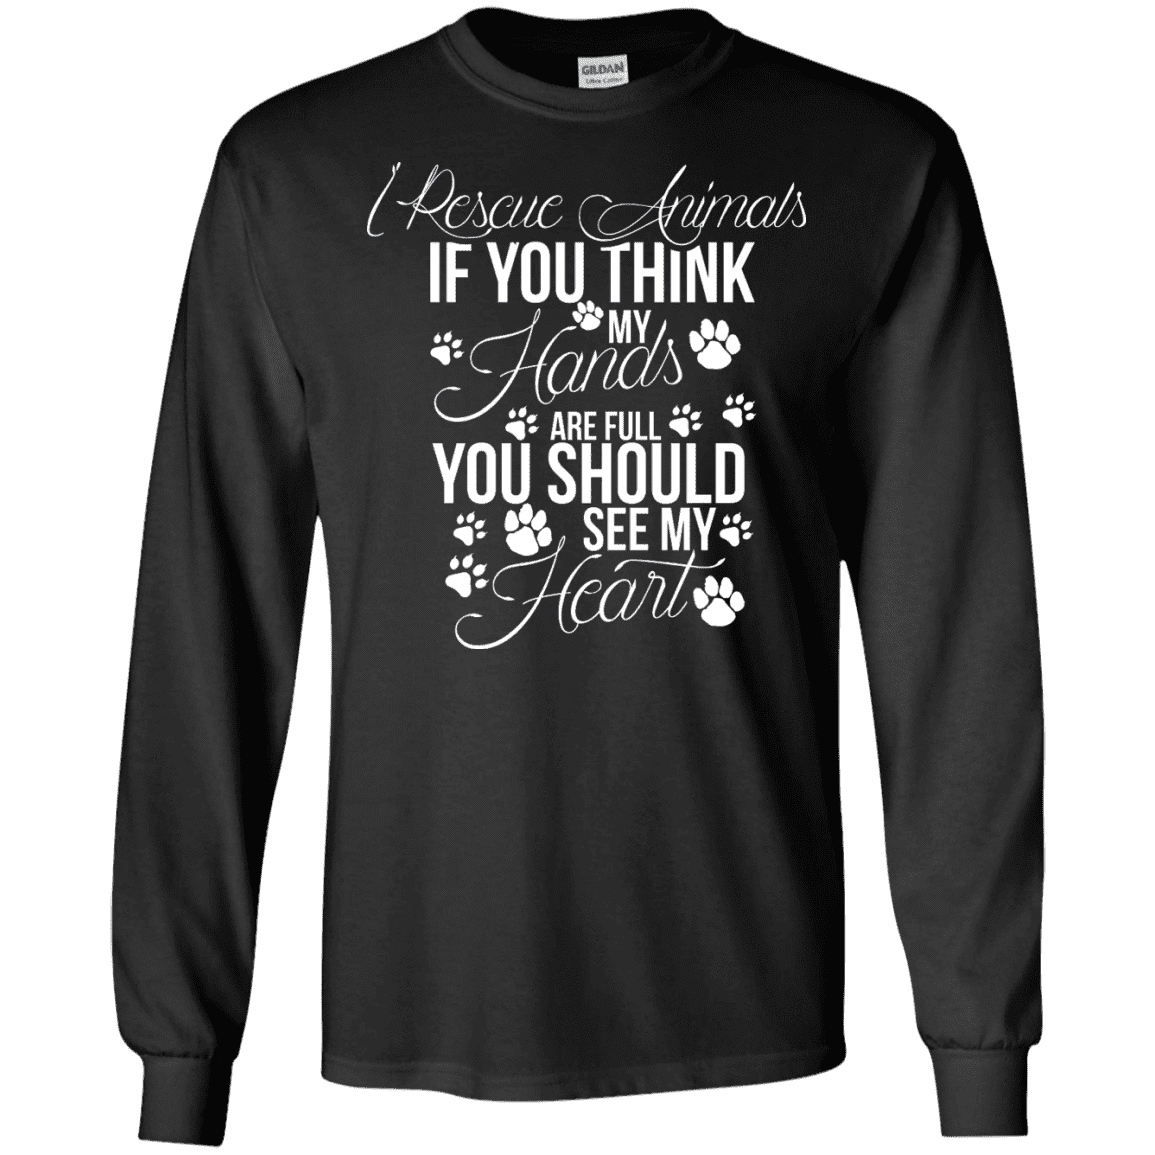 I Rescue Animals - Long Sleeve T Shirt.